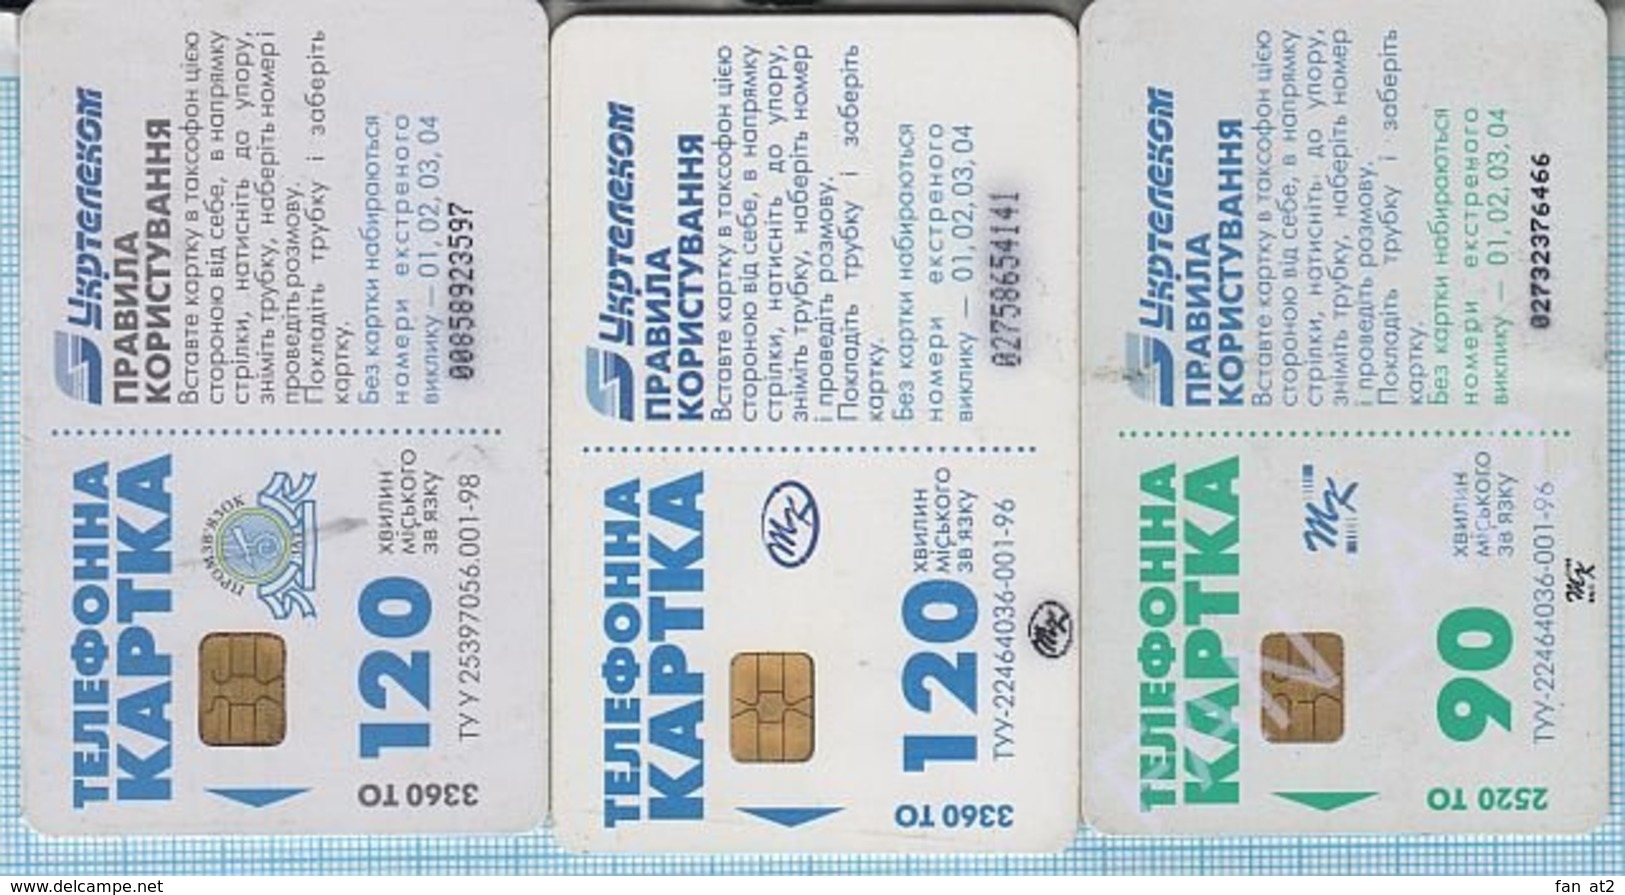 UKRAINE Ukrtelecom Police MIA Traffic Police Phonecards Patches Badges KIEV KYIV 2002-2003 - Ukraine